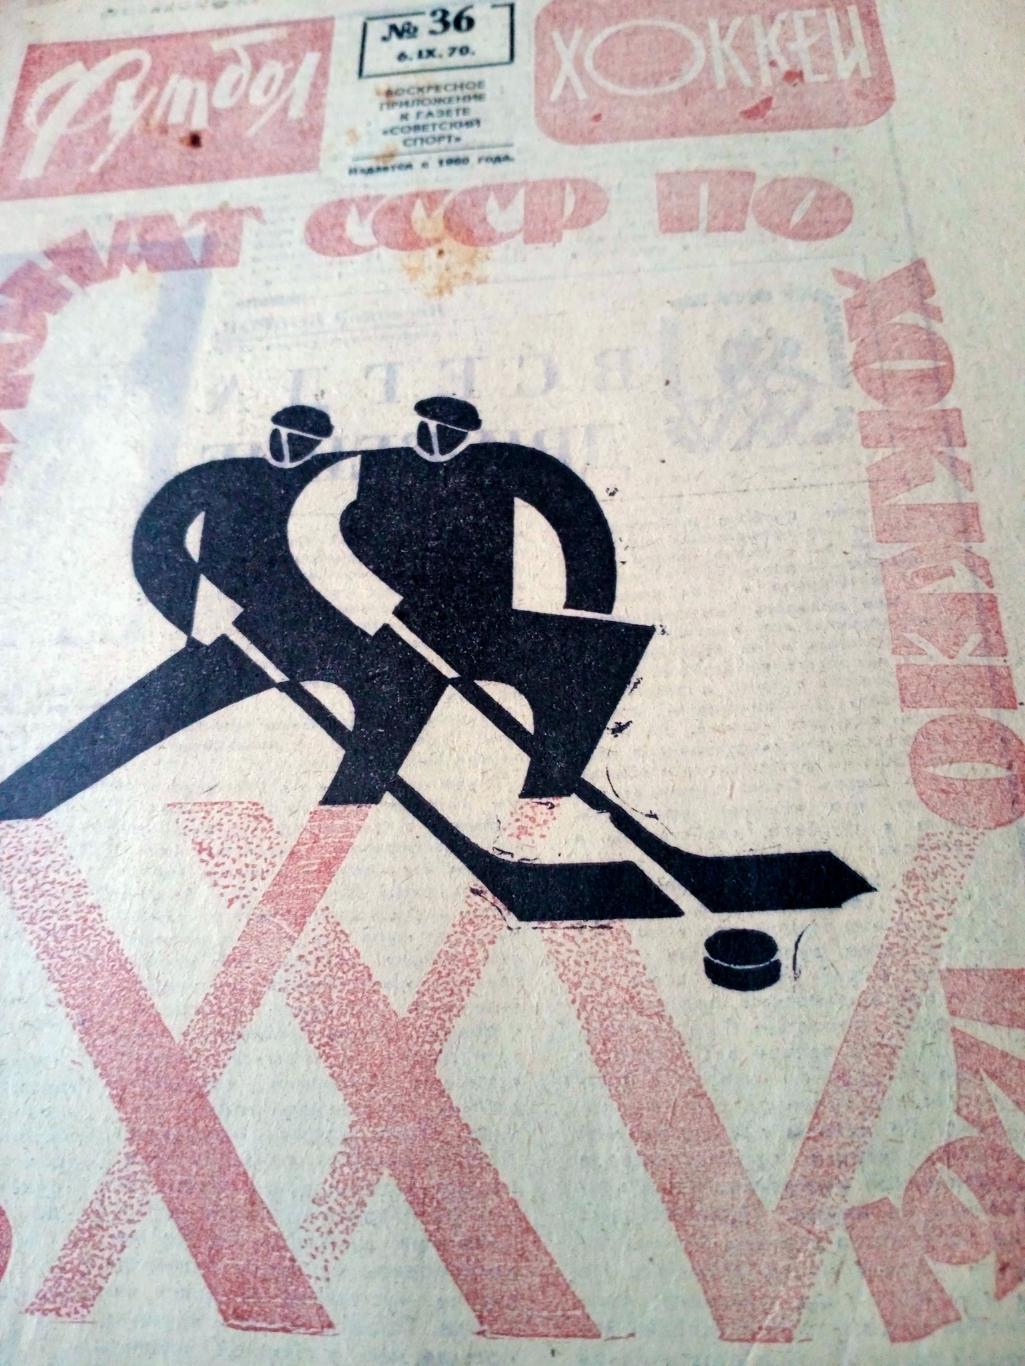 Футбол-Хоккей. 1970 год. №36